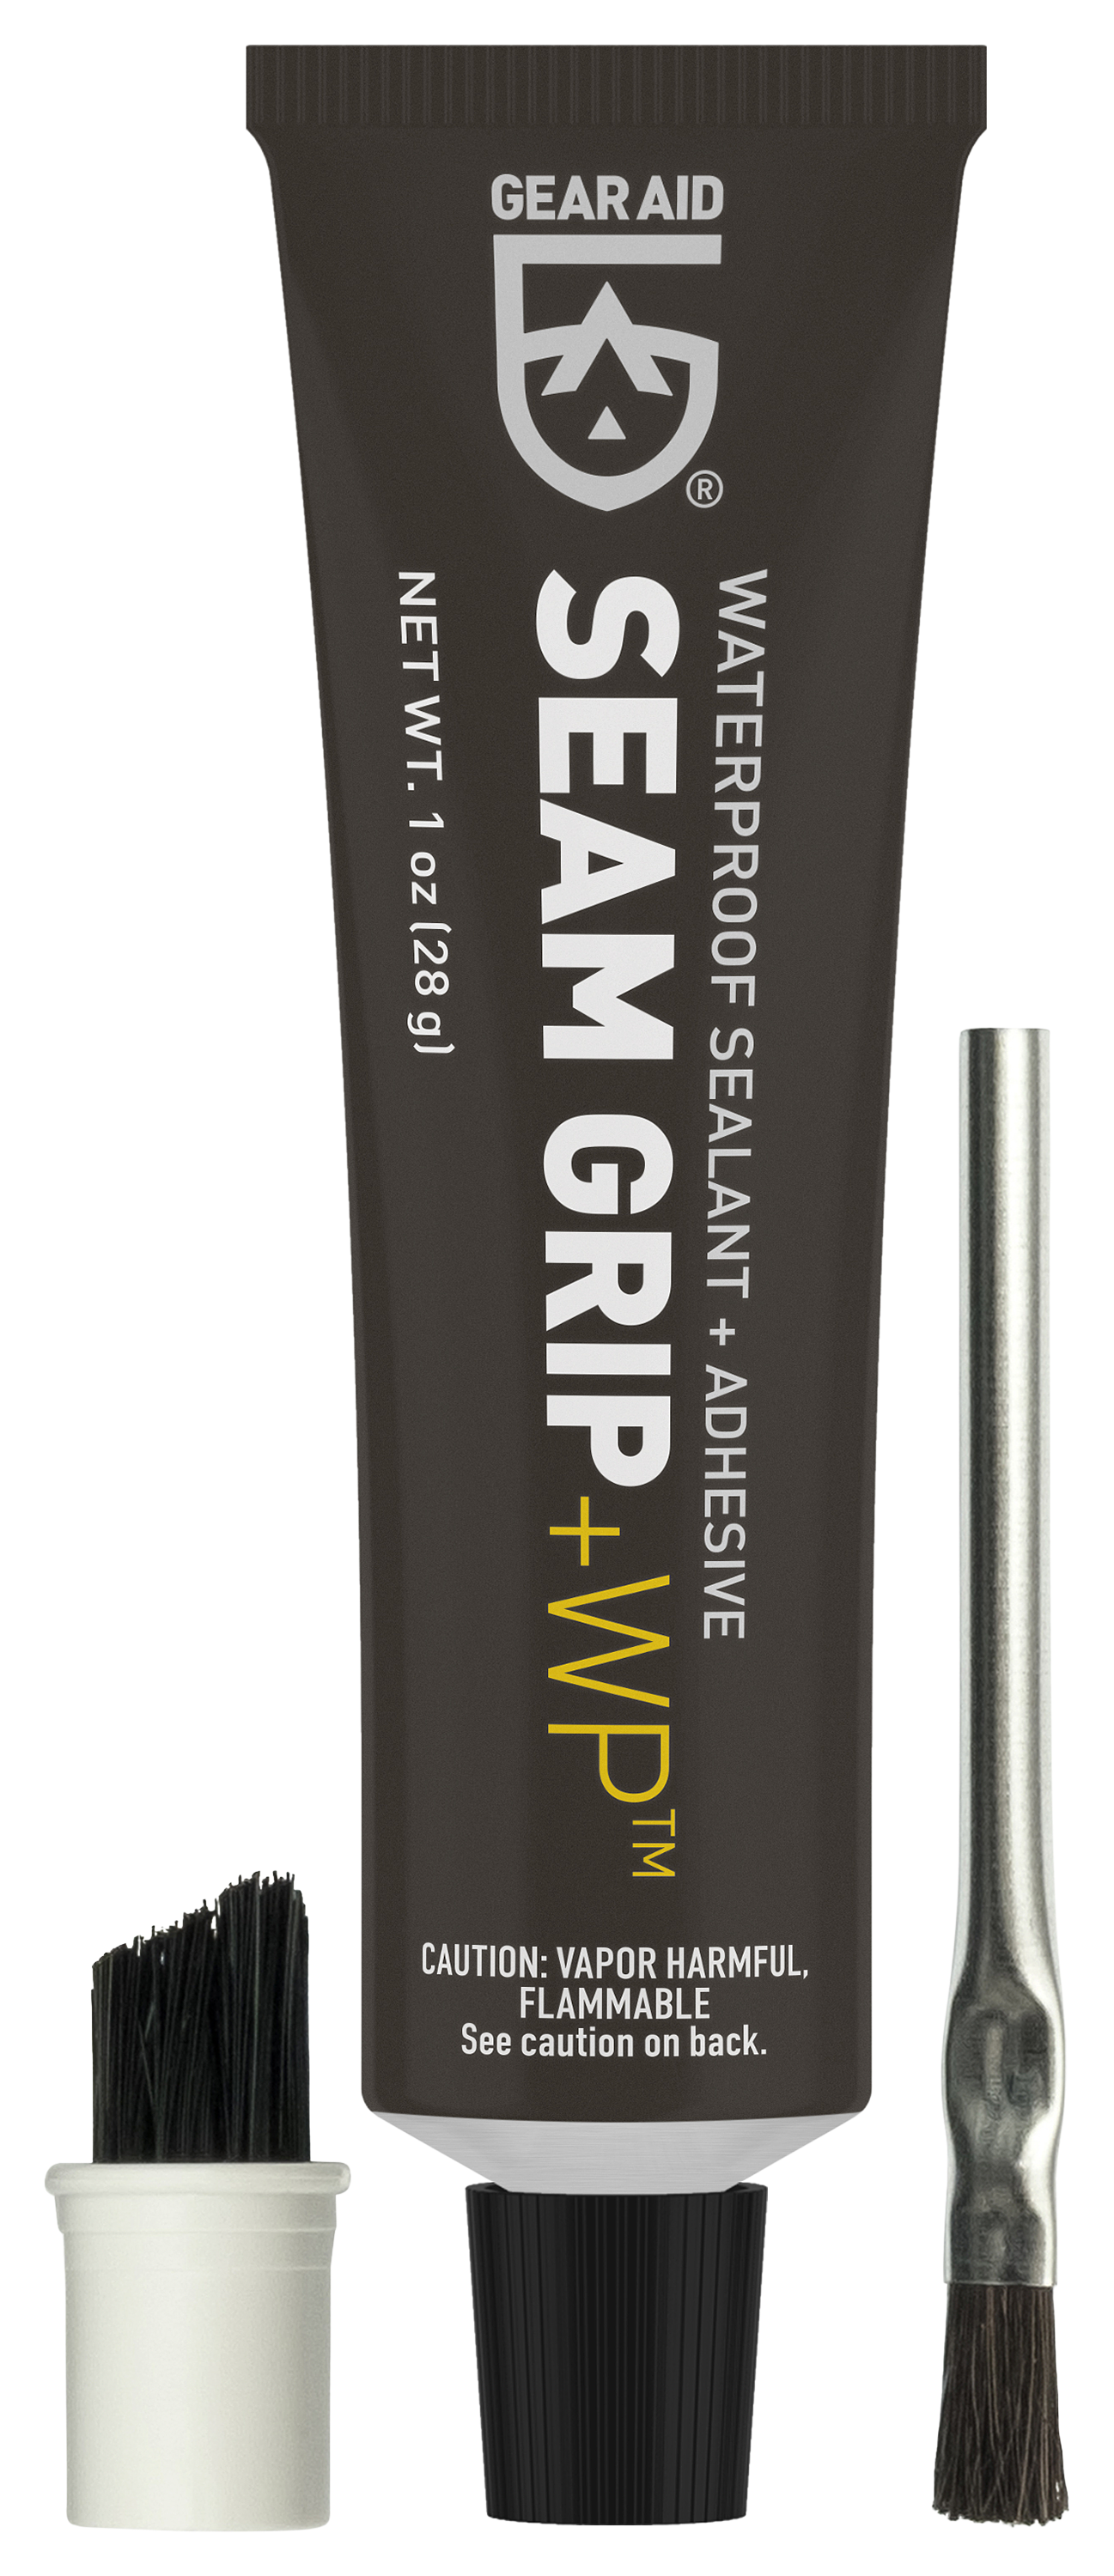 Gear Aid Seam Grip Repair and Seam Sealer with Brush Applicator